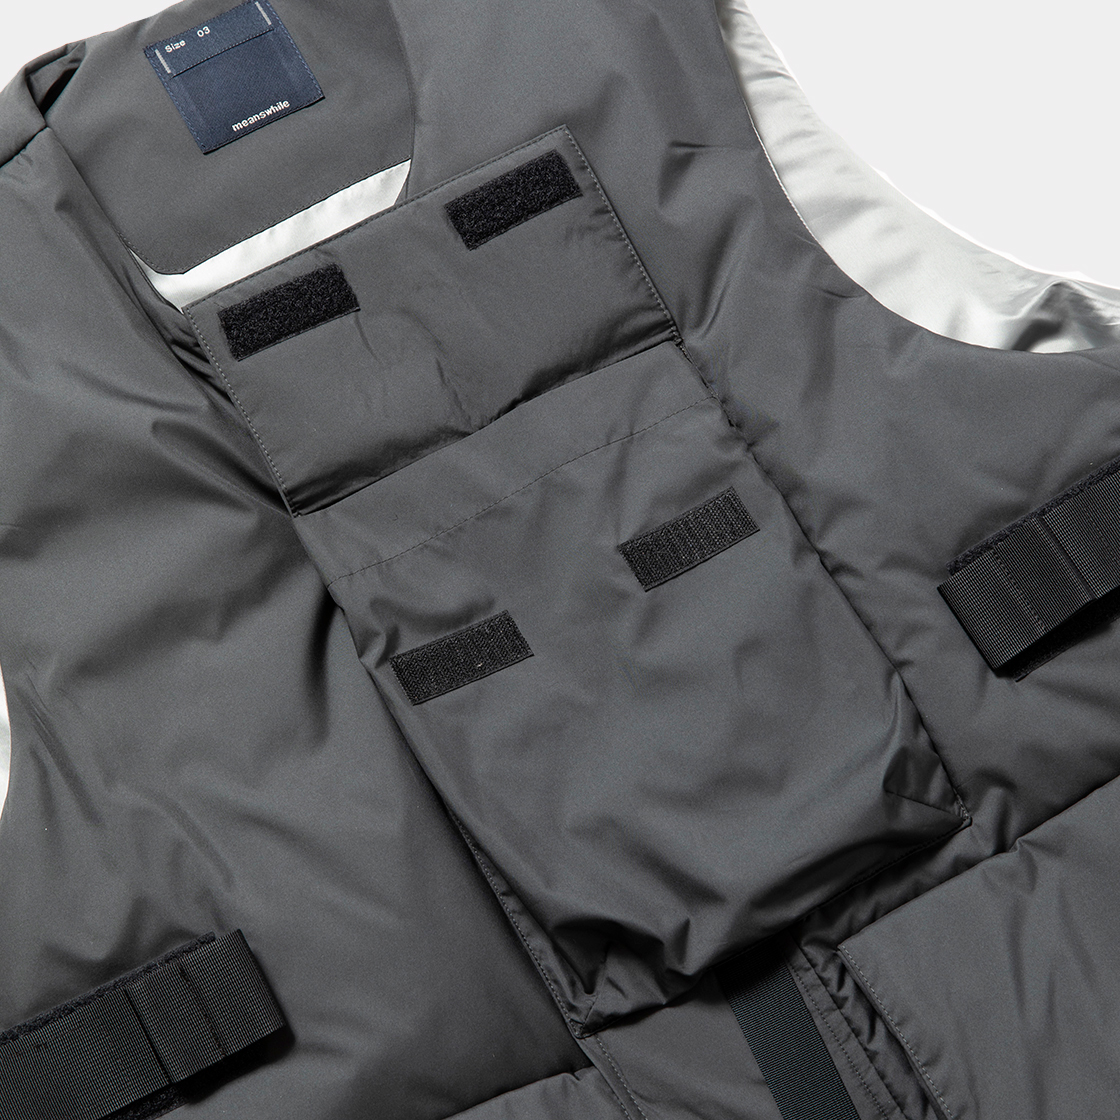 Padding Body Armor Vest / Graphite